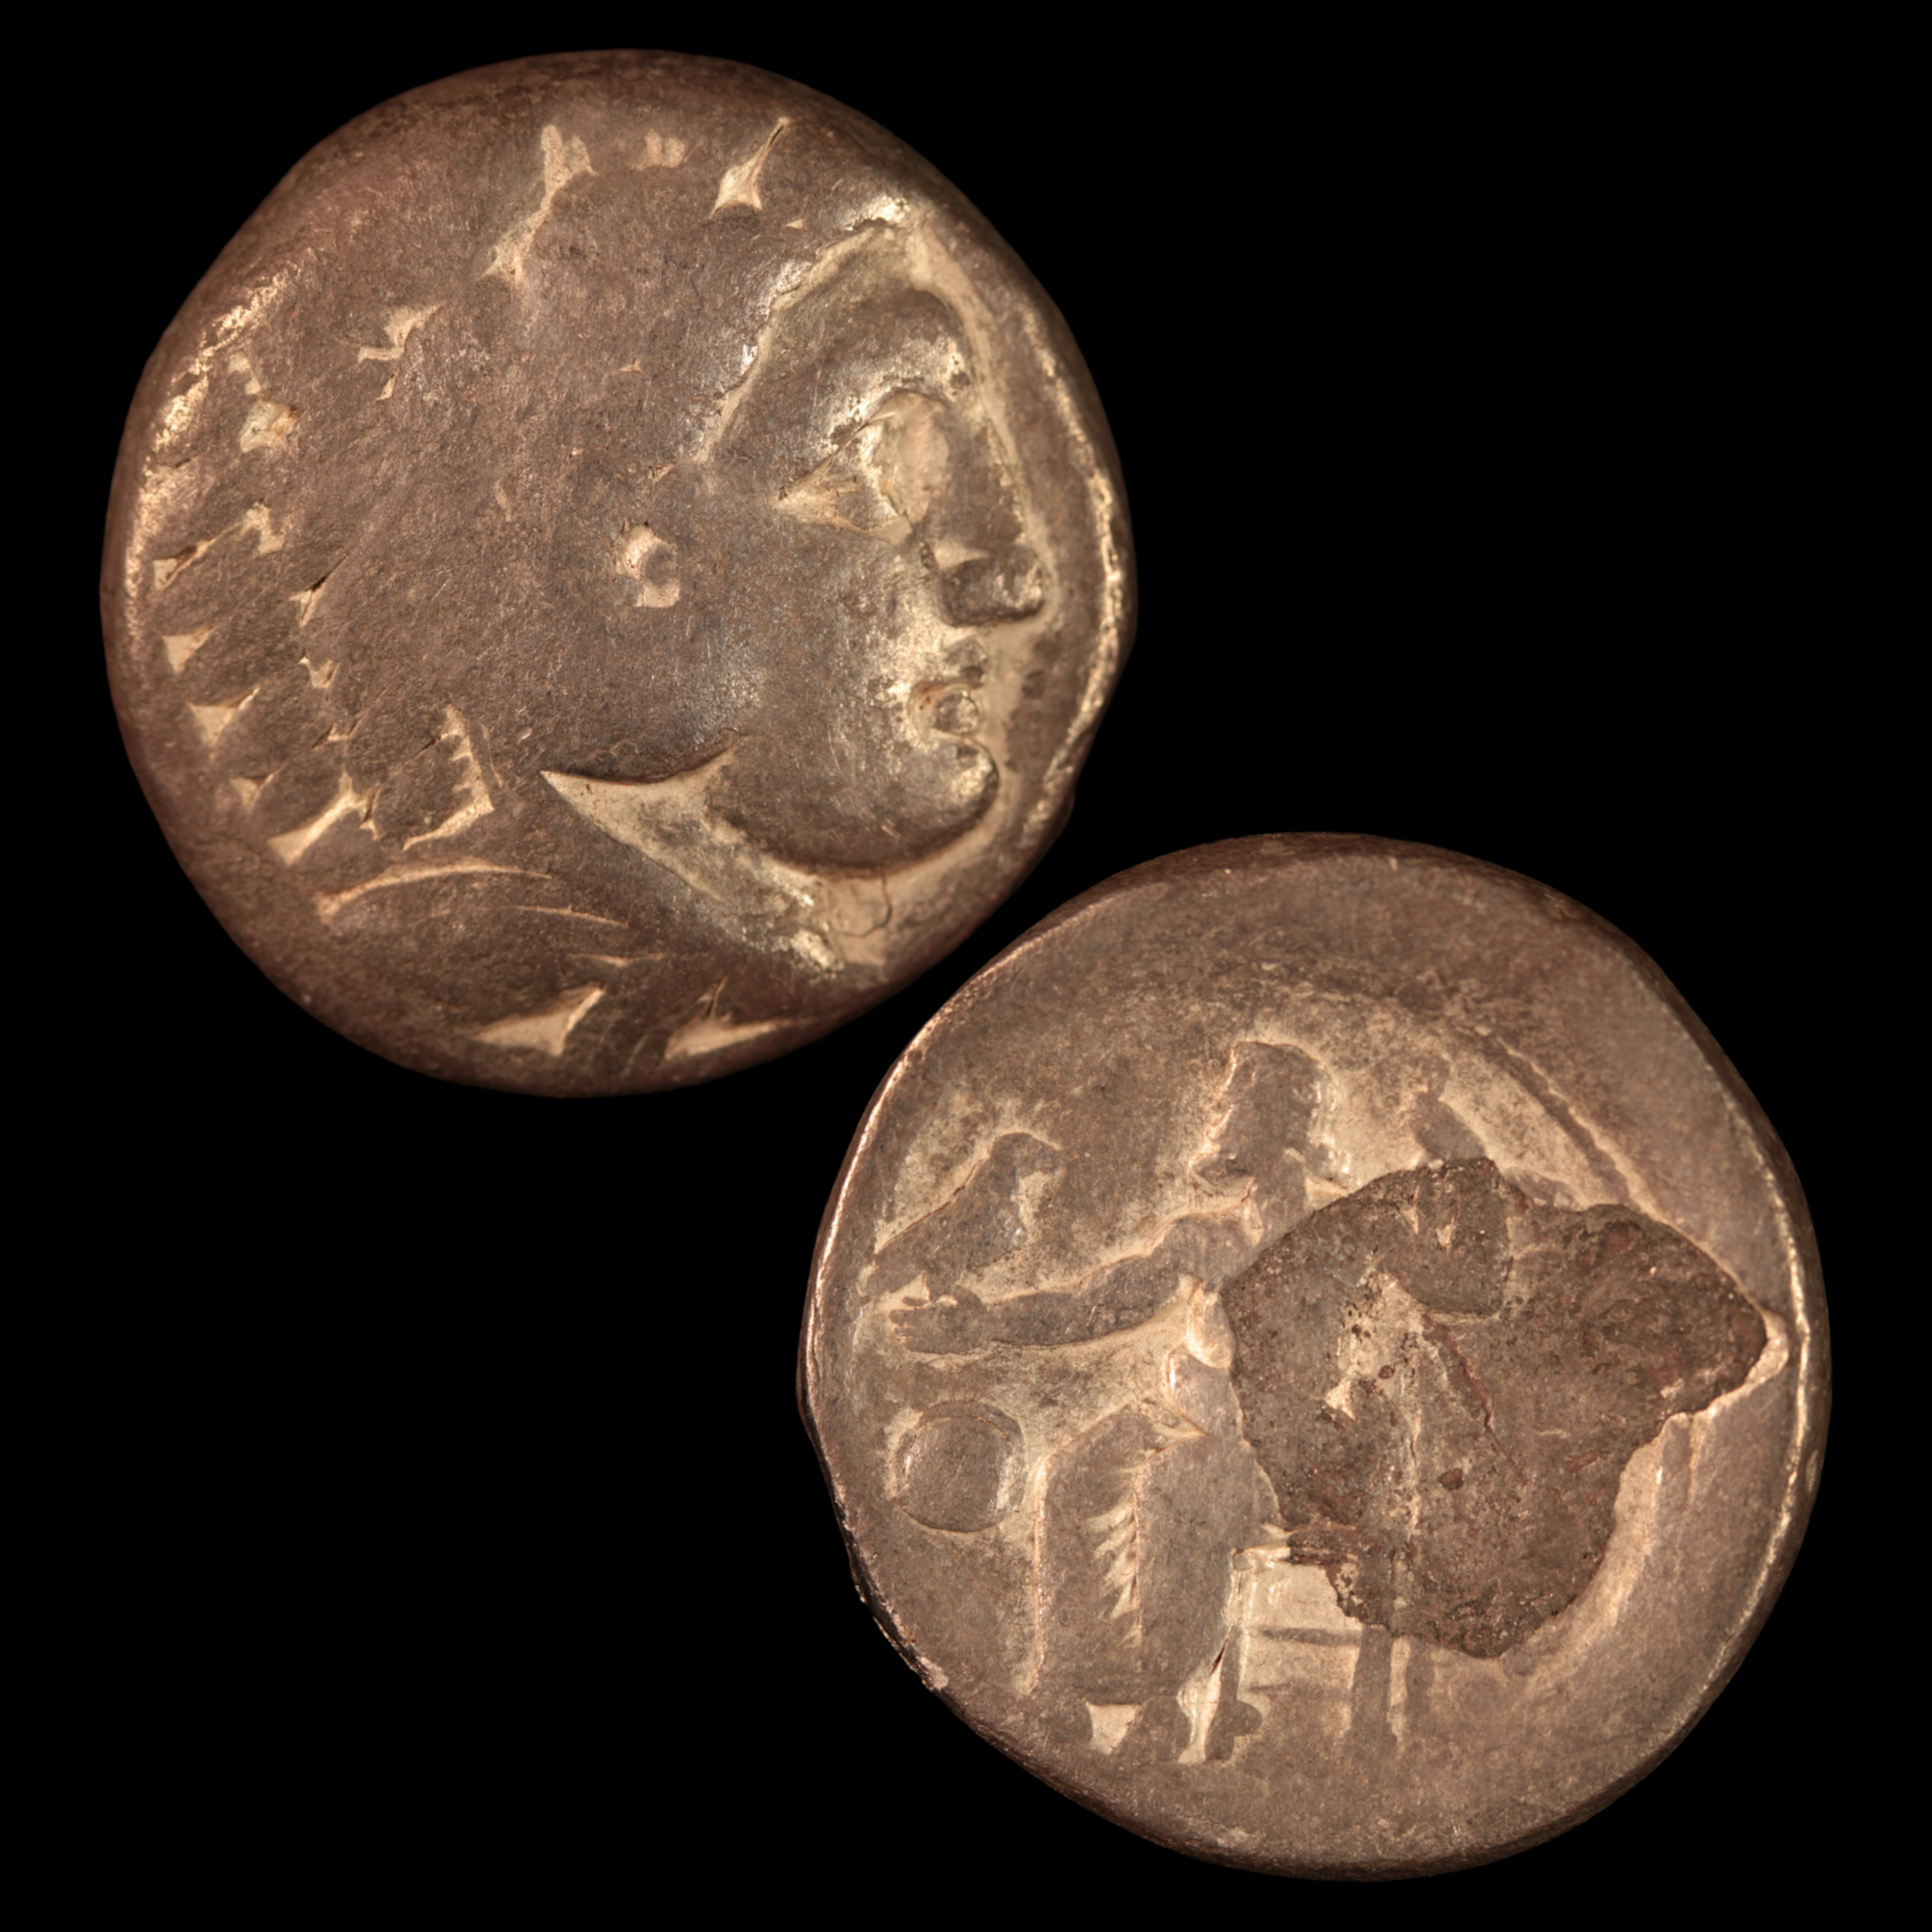 Alexander the Great Silver Tetradrachm - 336 to 323 BCE - Macedonian Empire